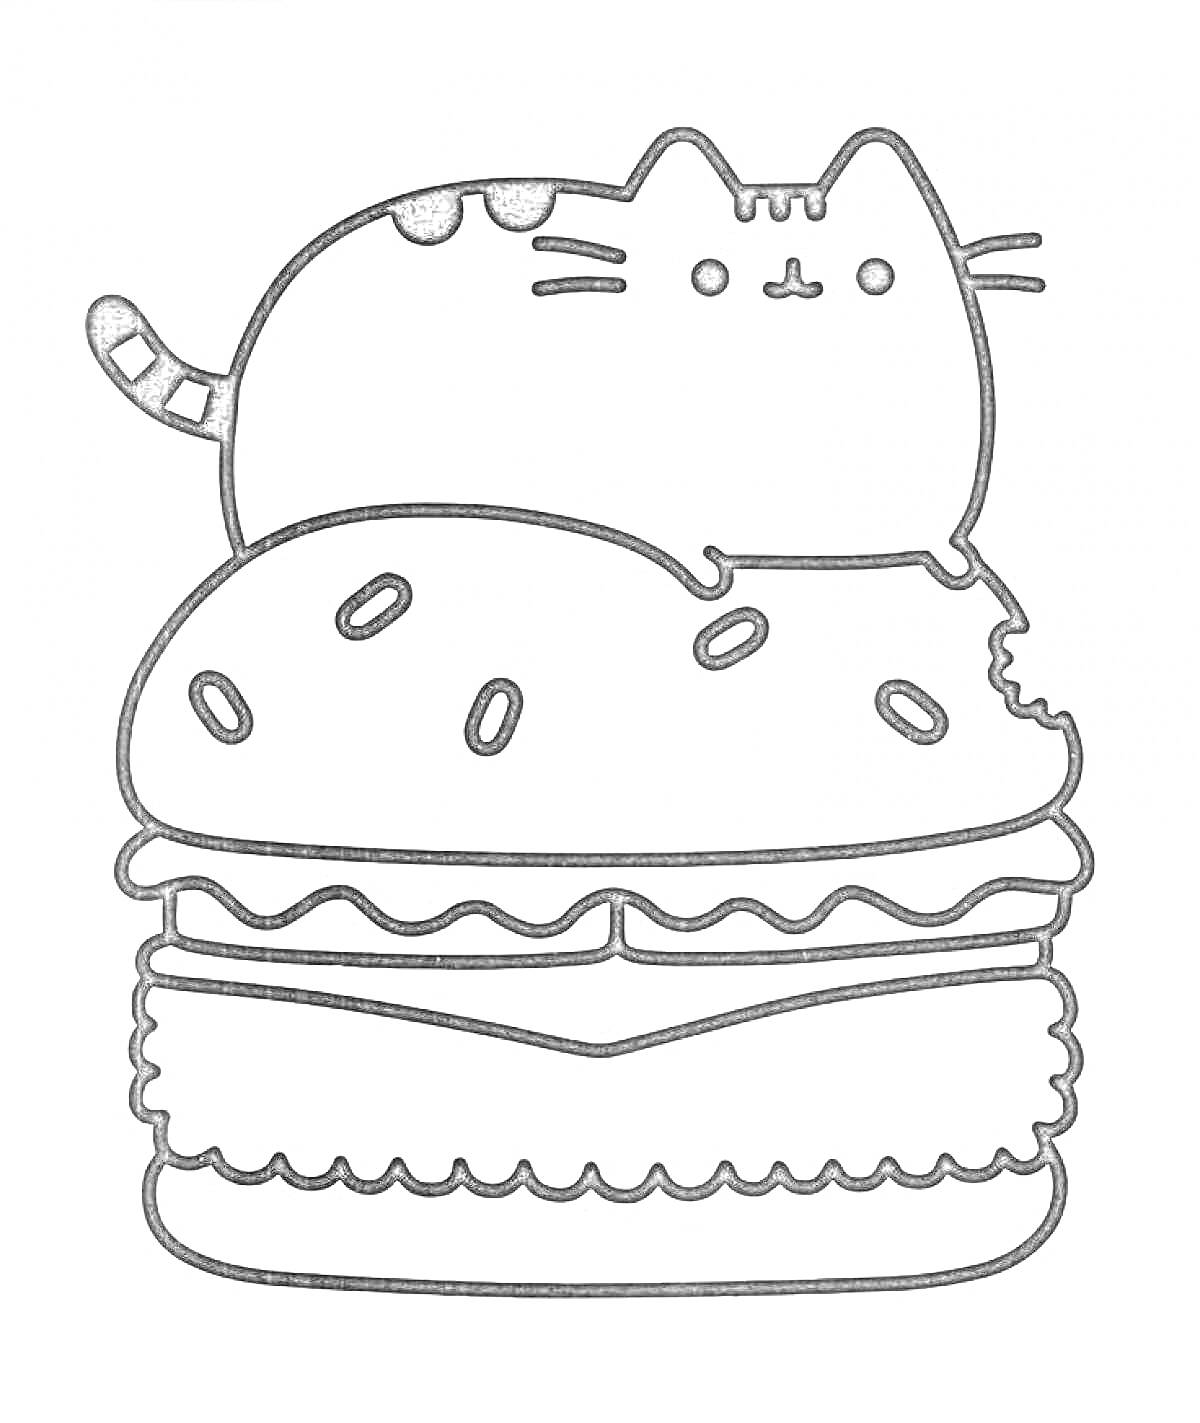 Кошка на бургере с листьями салата